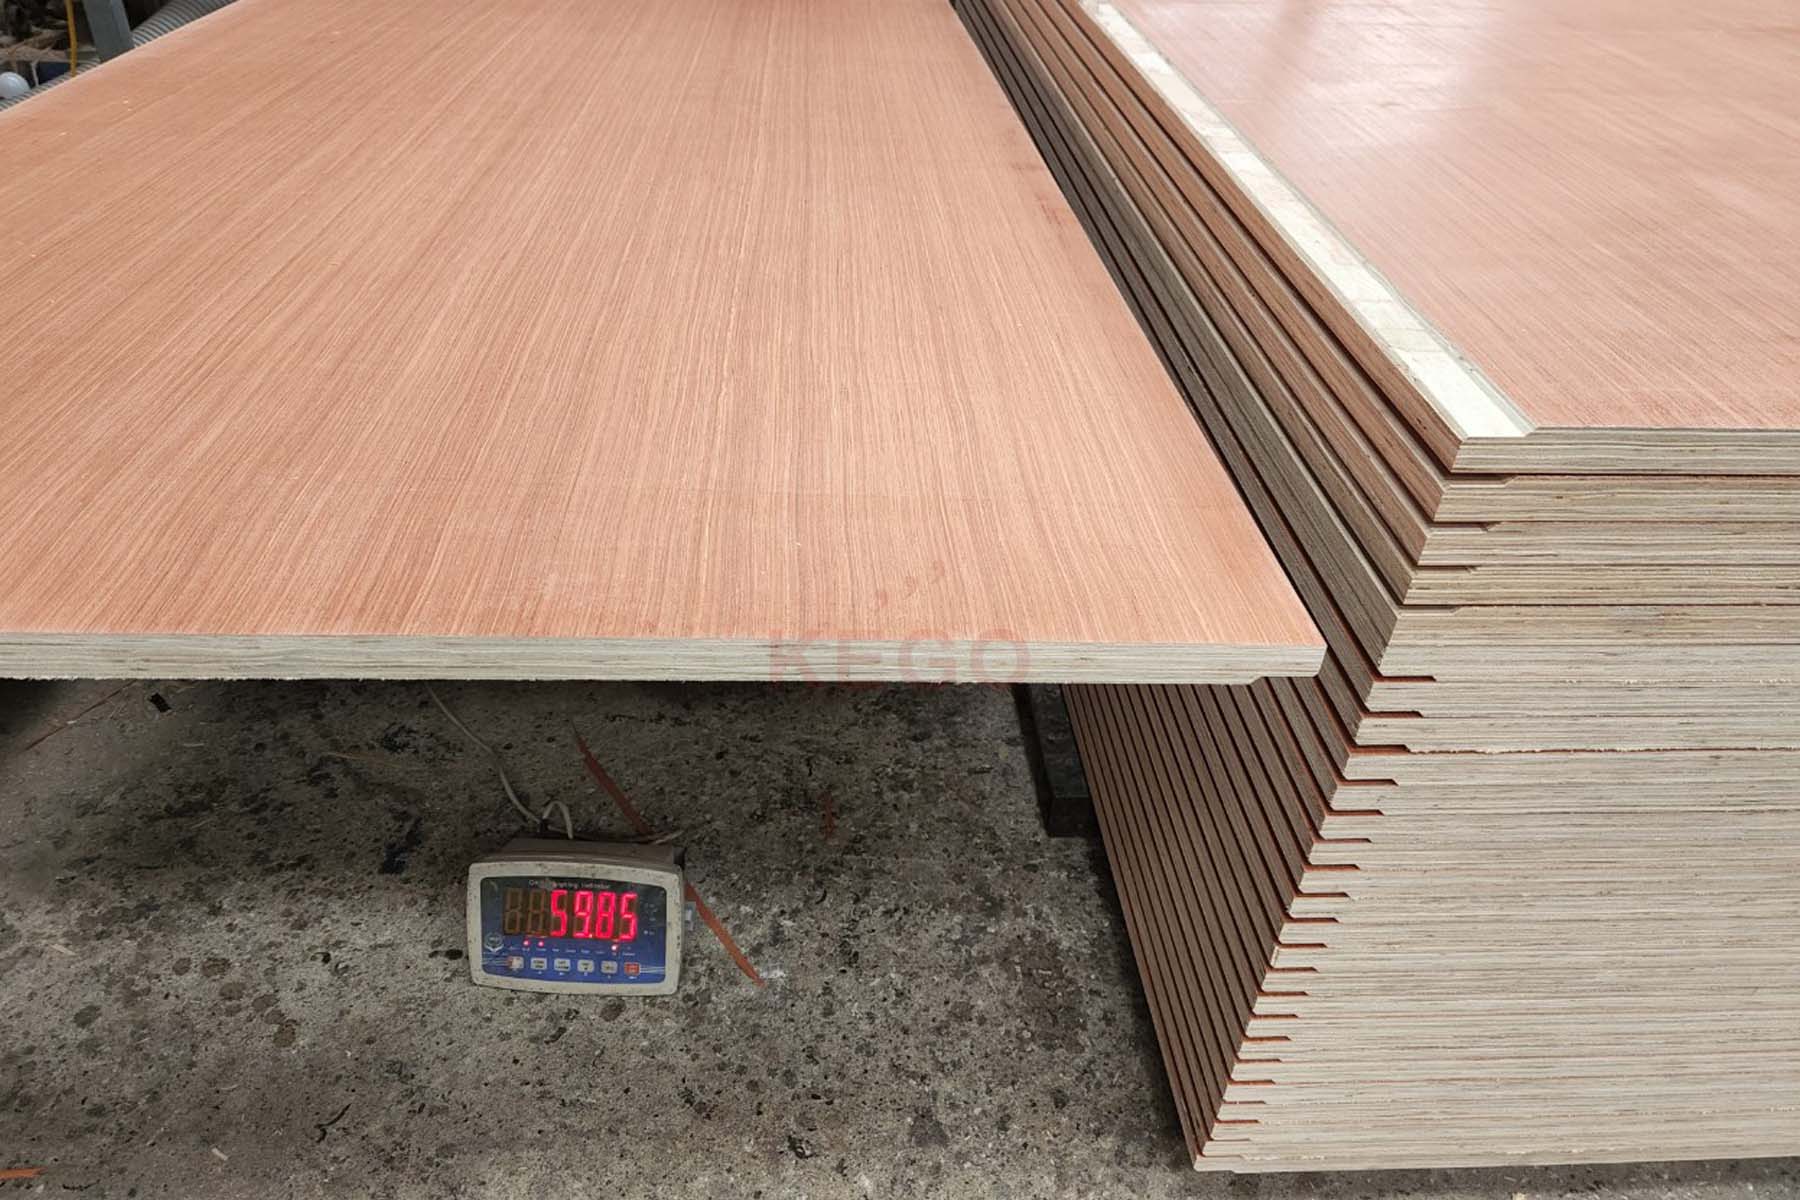 https://kego.com.vn/wp-content/uploads/2015/09/container-flooring-plywood-kego-9.jpg